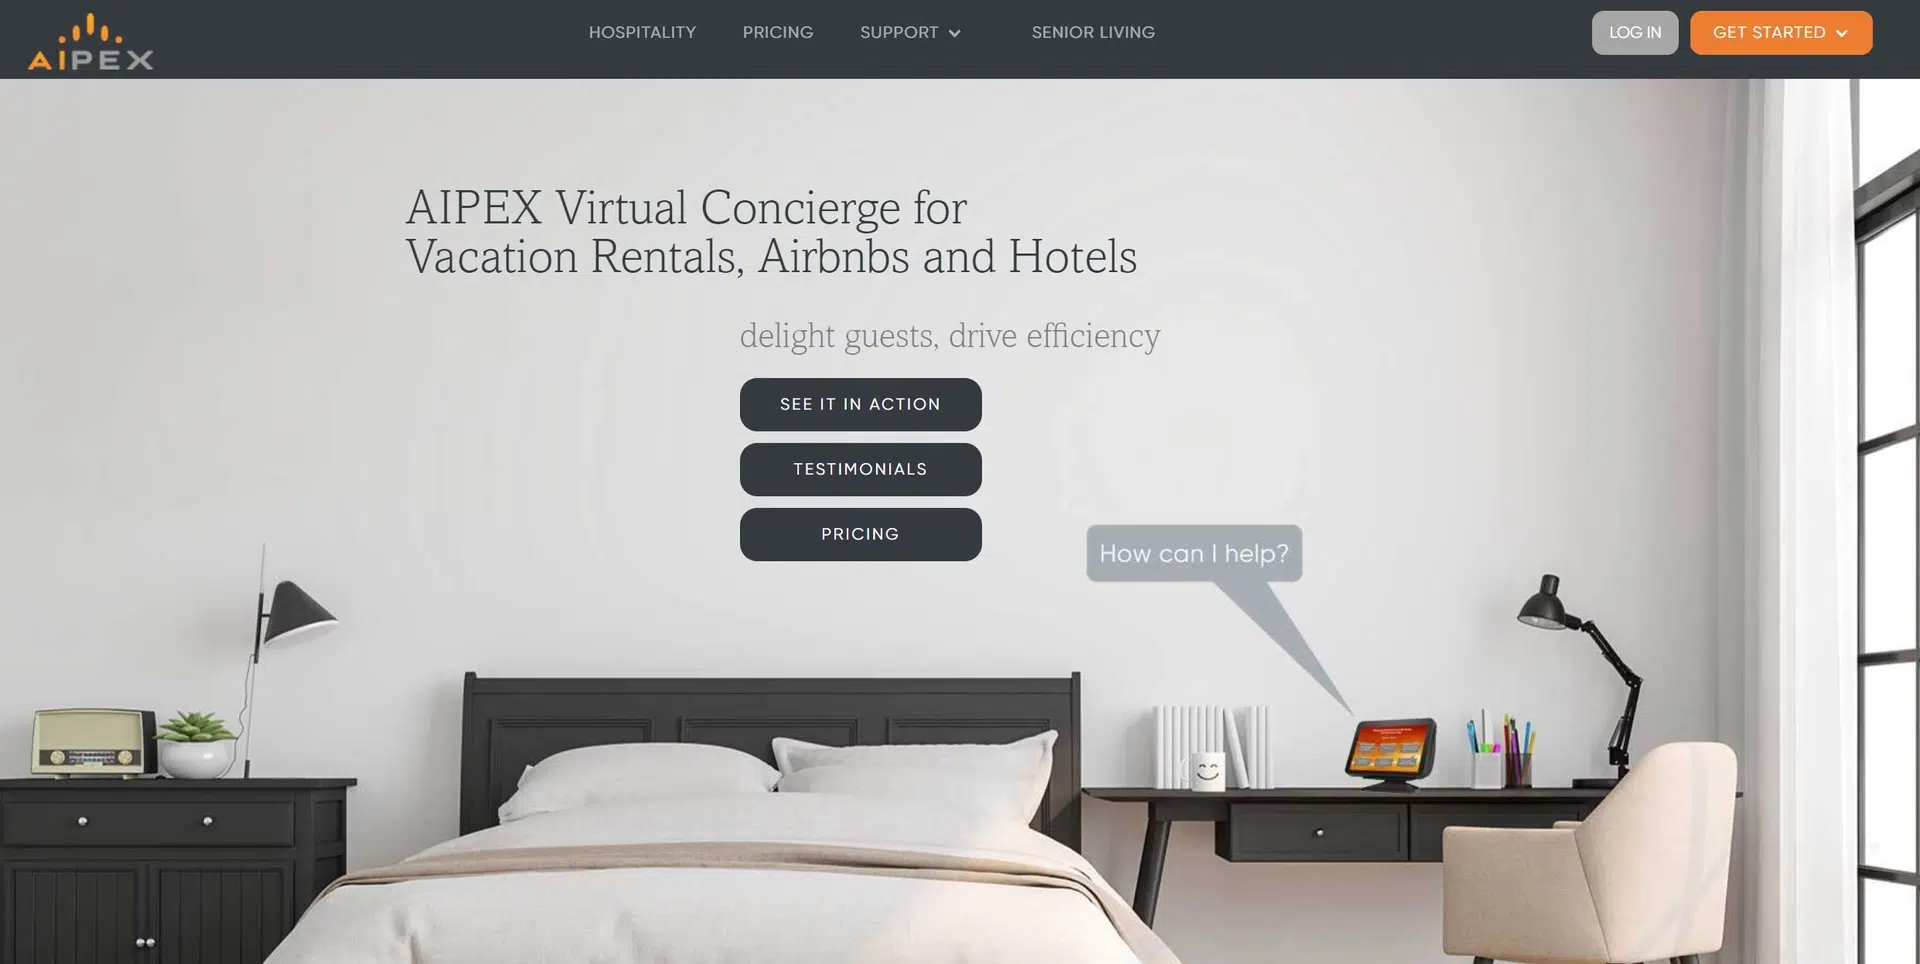 AIPEX Virtual Conciergewebsite picture